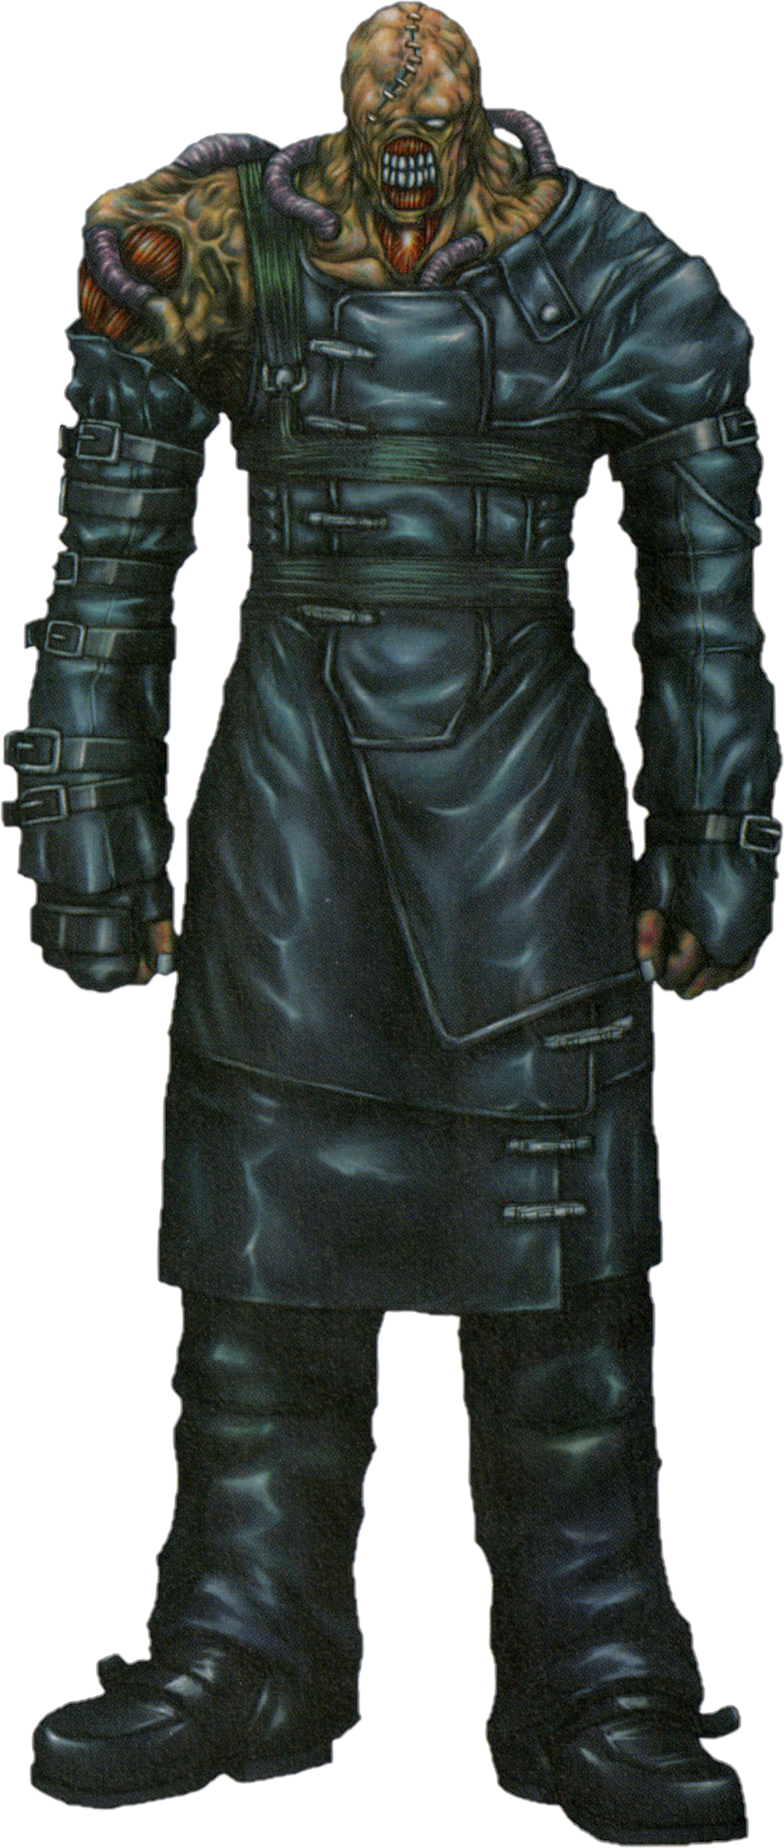 Nemesis (Resident Evil) - Wikipedia